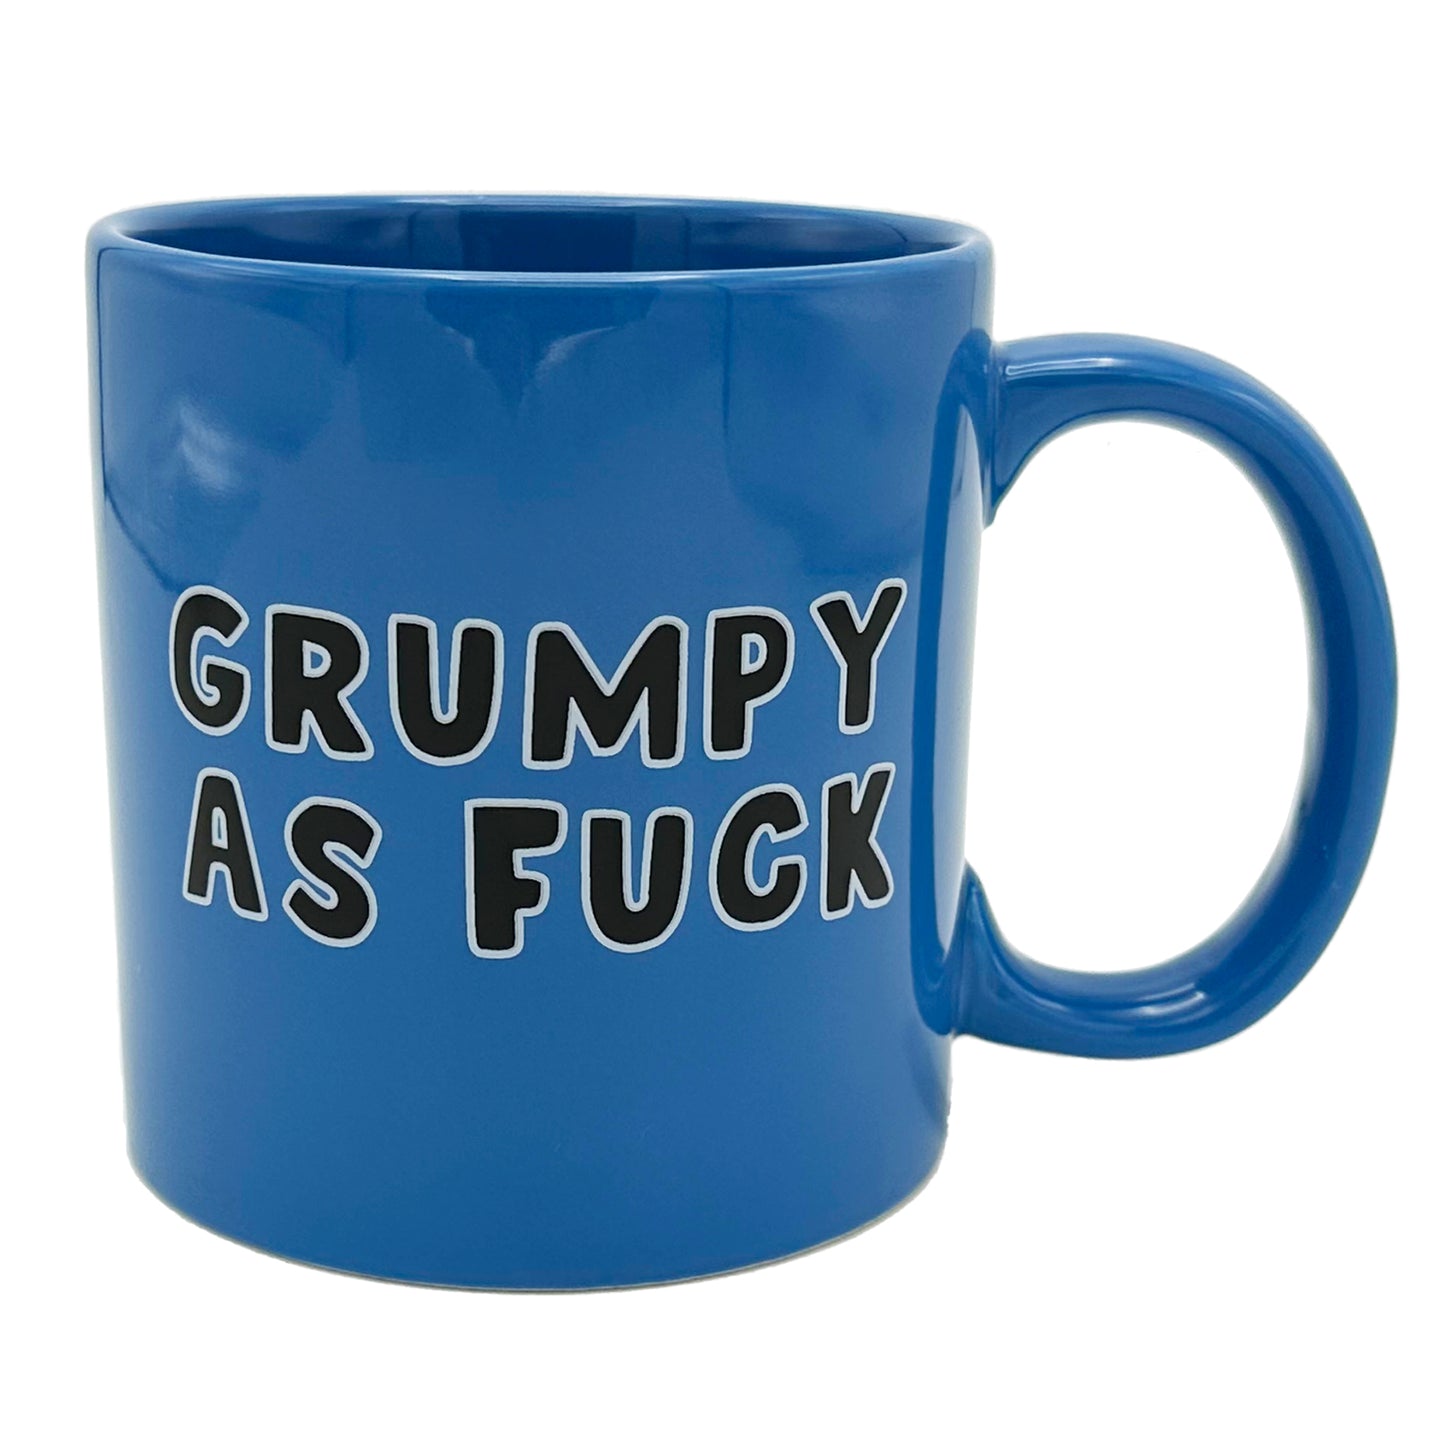 Giant Grumpy as Fuck Mug